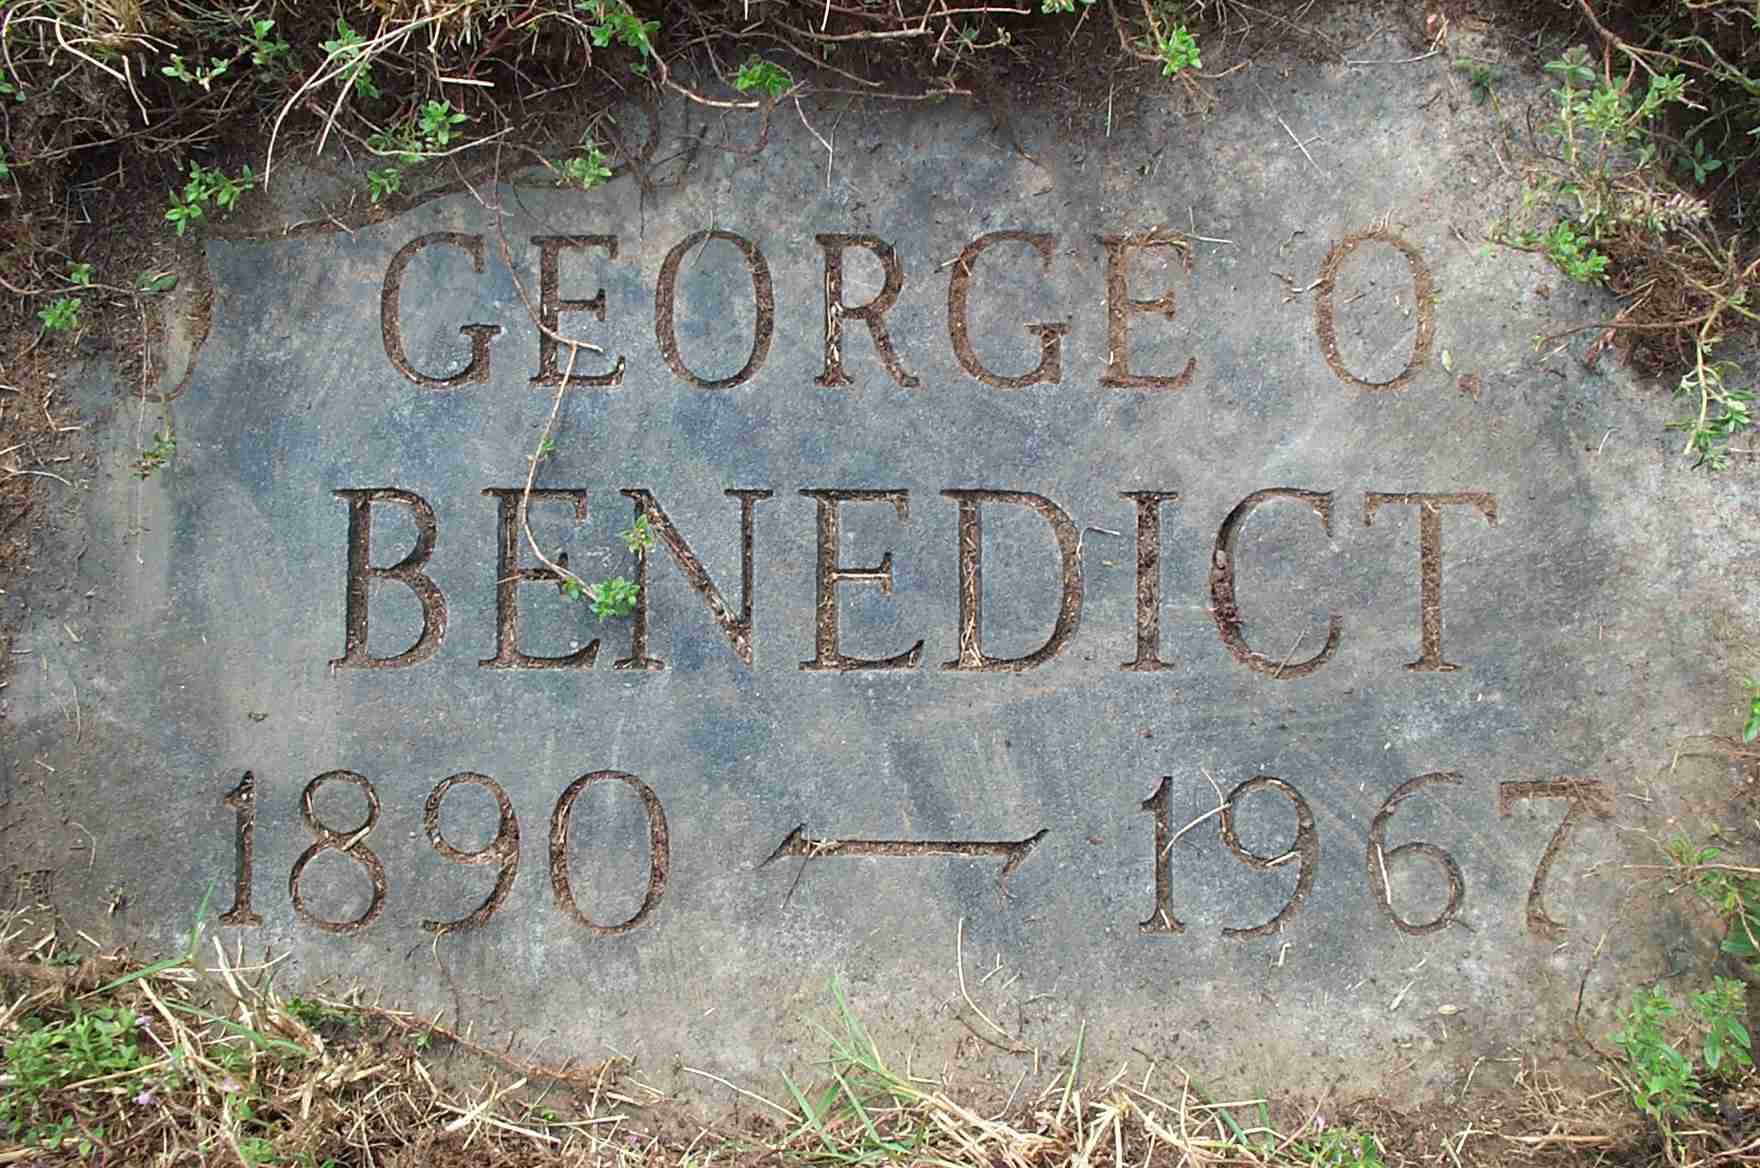 George O. Benedict